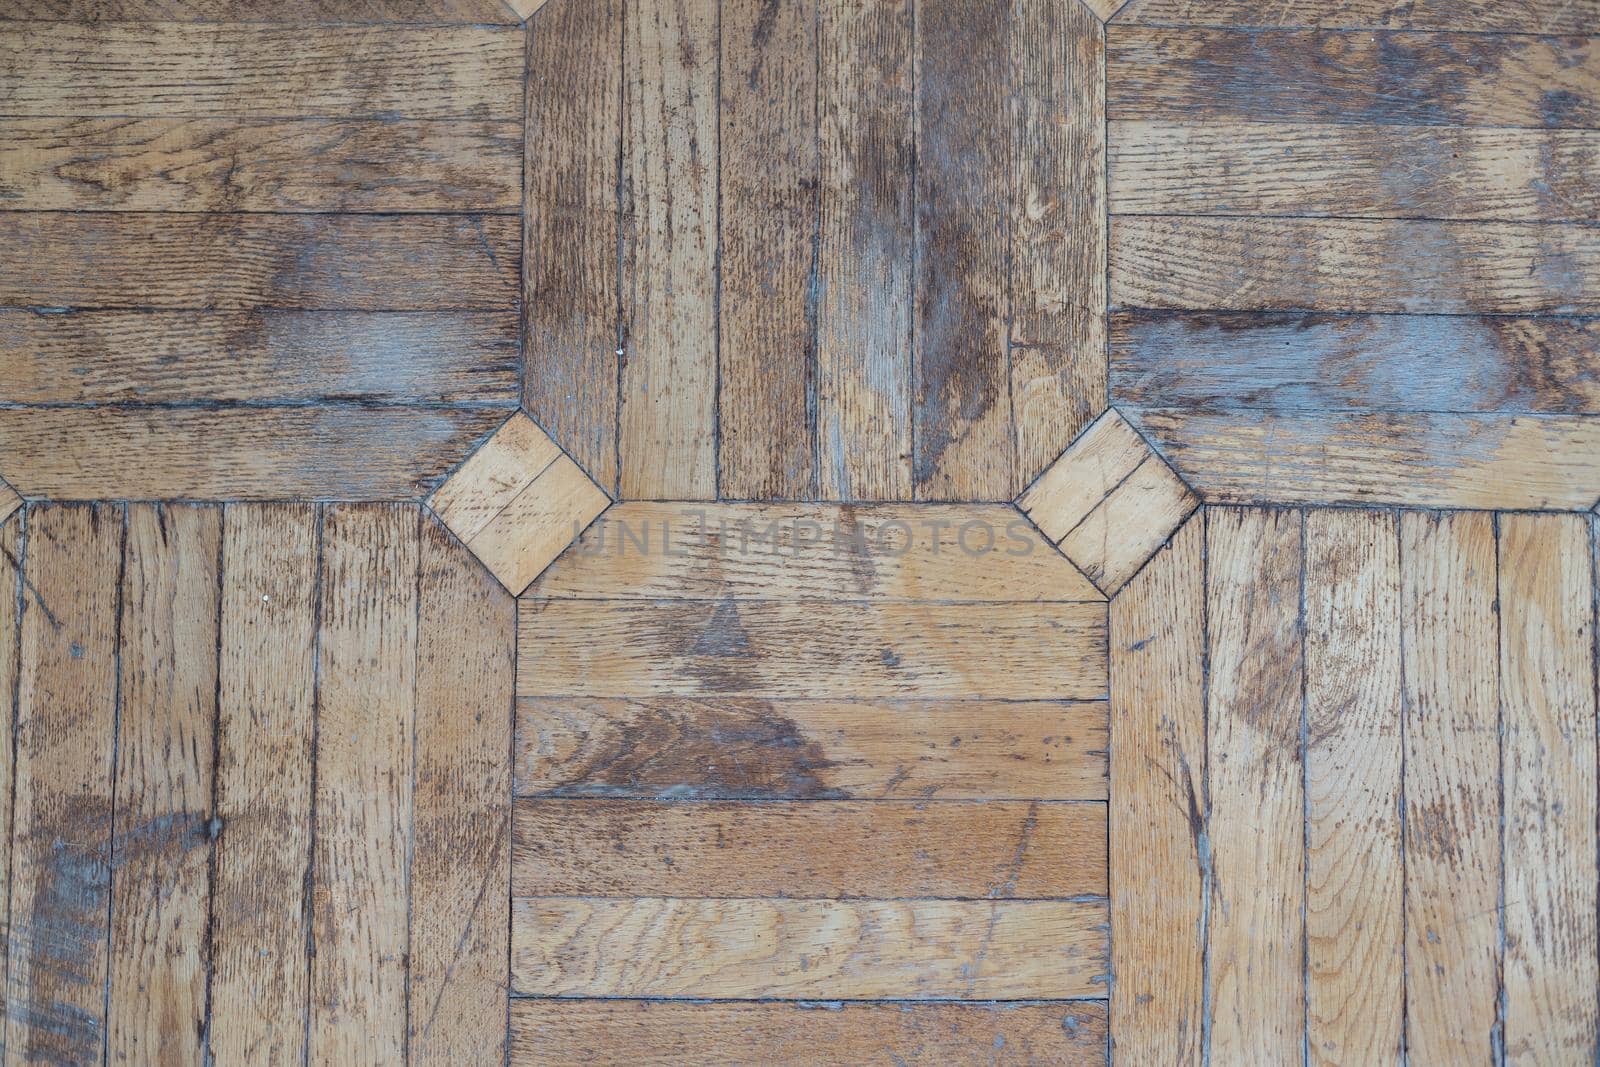 Texture of old worn parquet floor, close up.